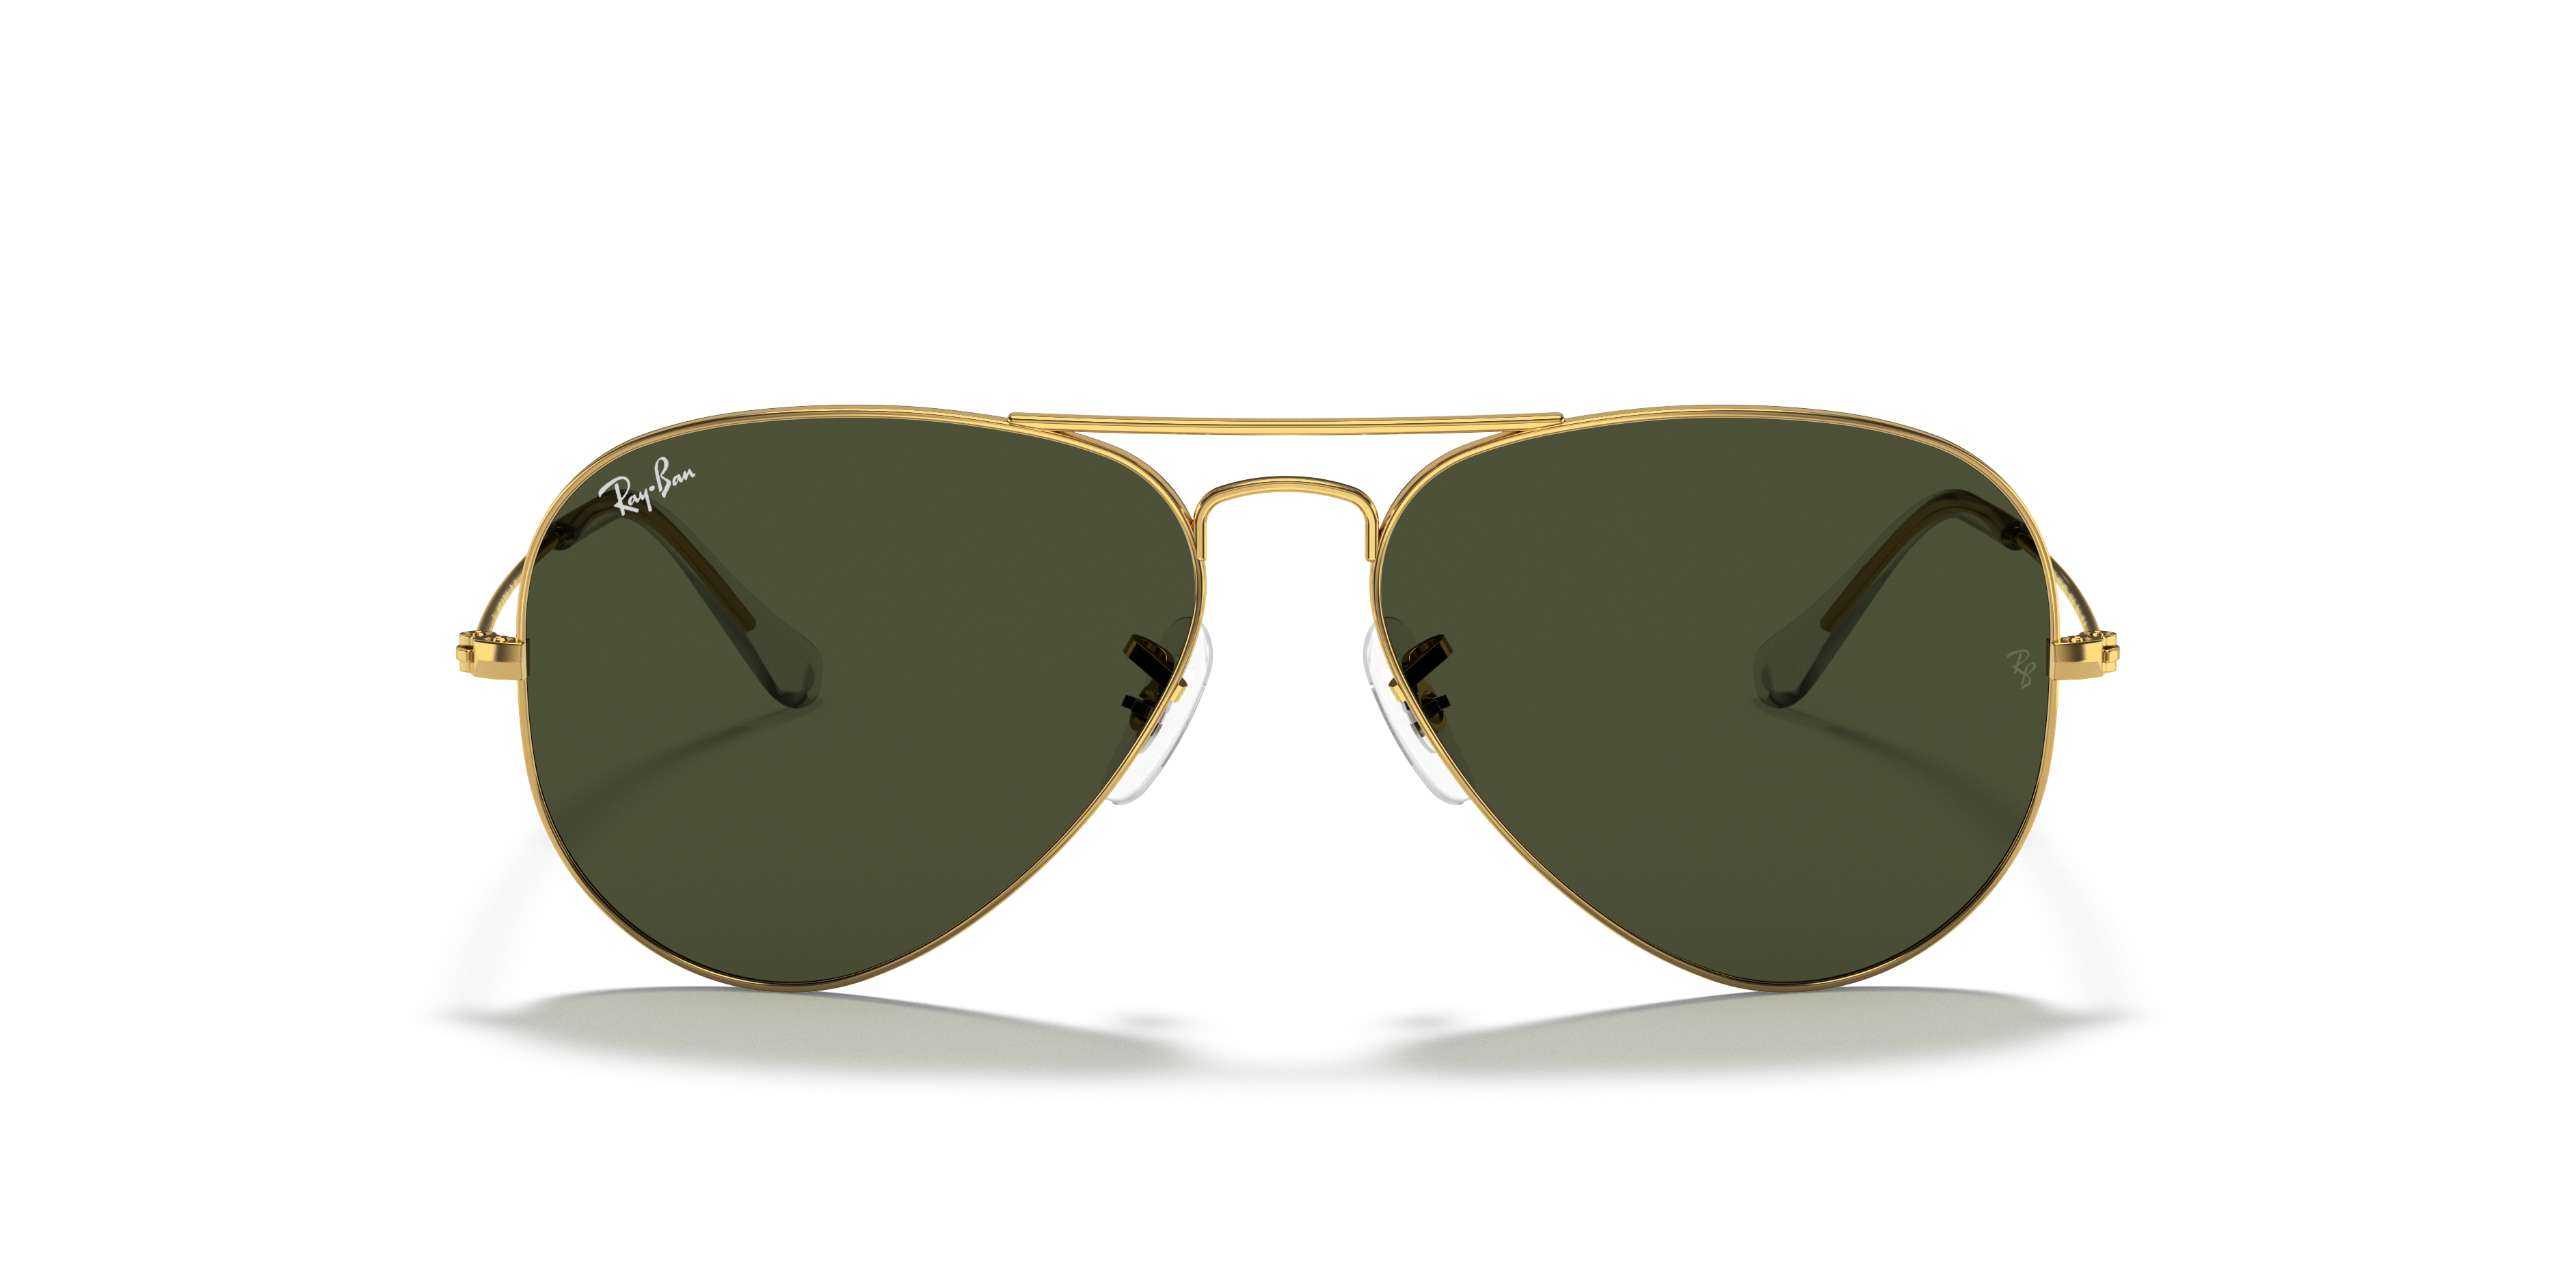 aviador Verde Lentes espejados Marco dorado Gafas de sol Ray Ban RB3025 * 58/14 